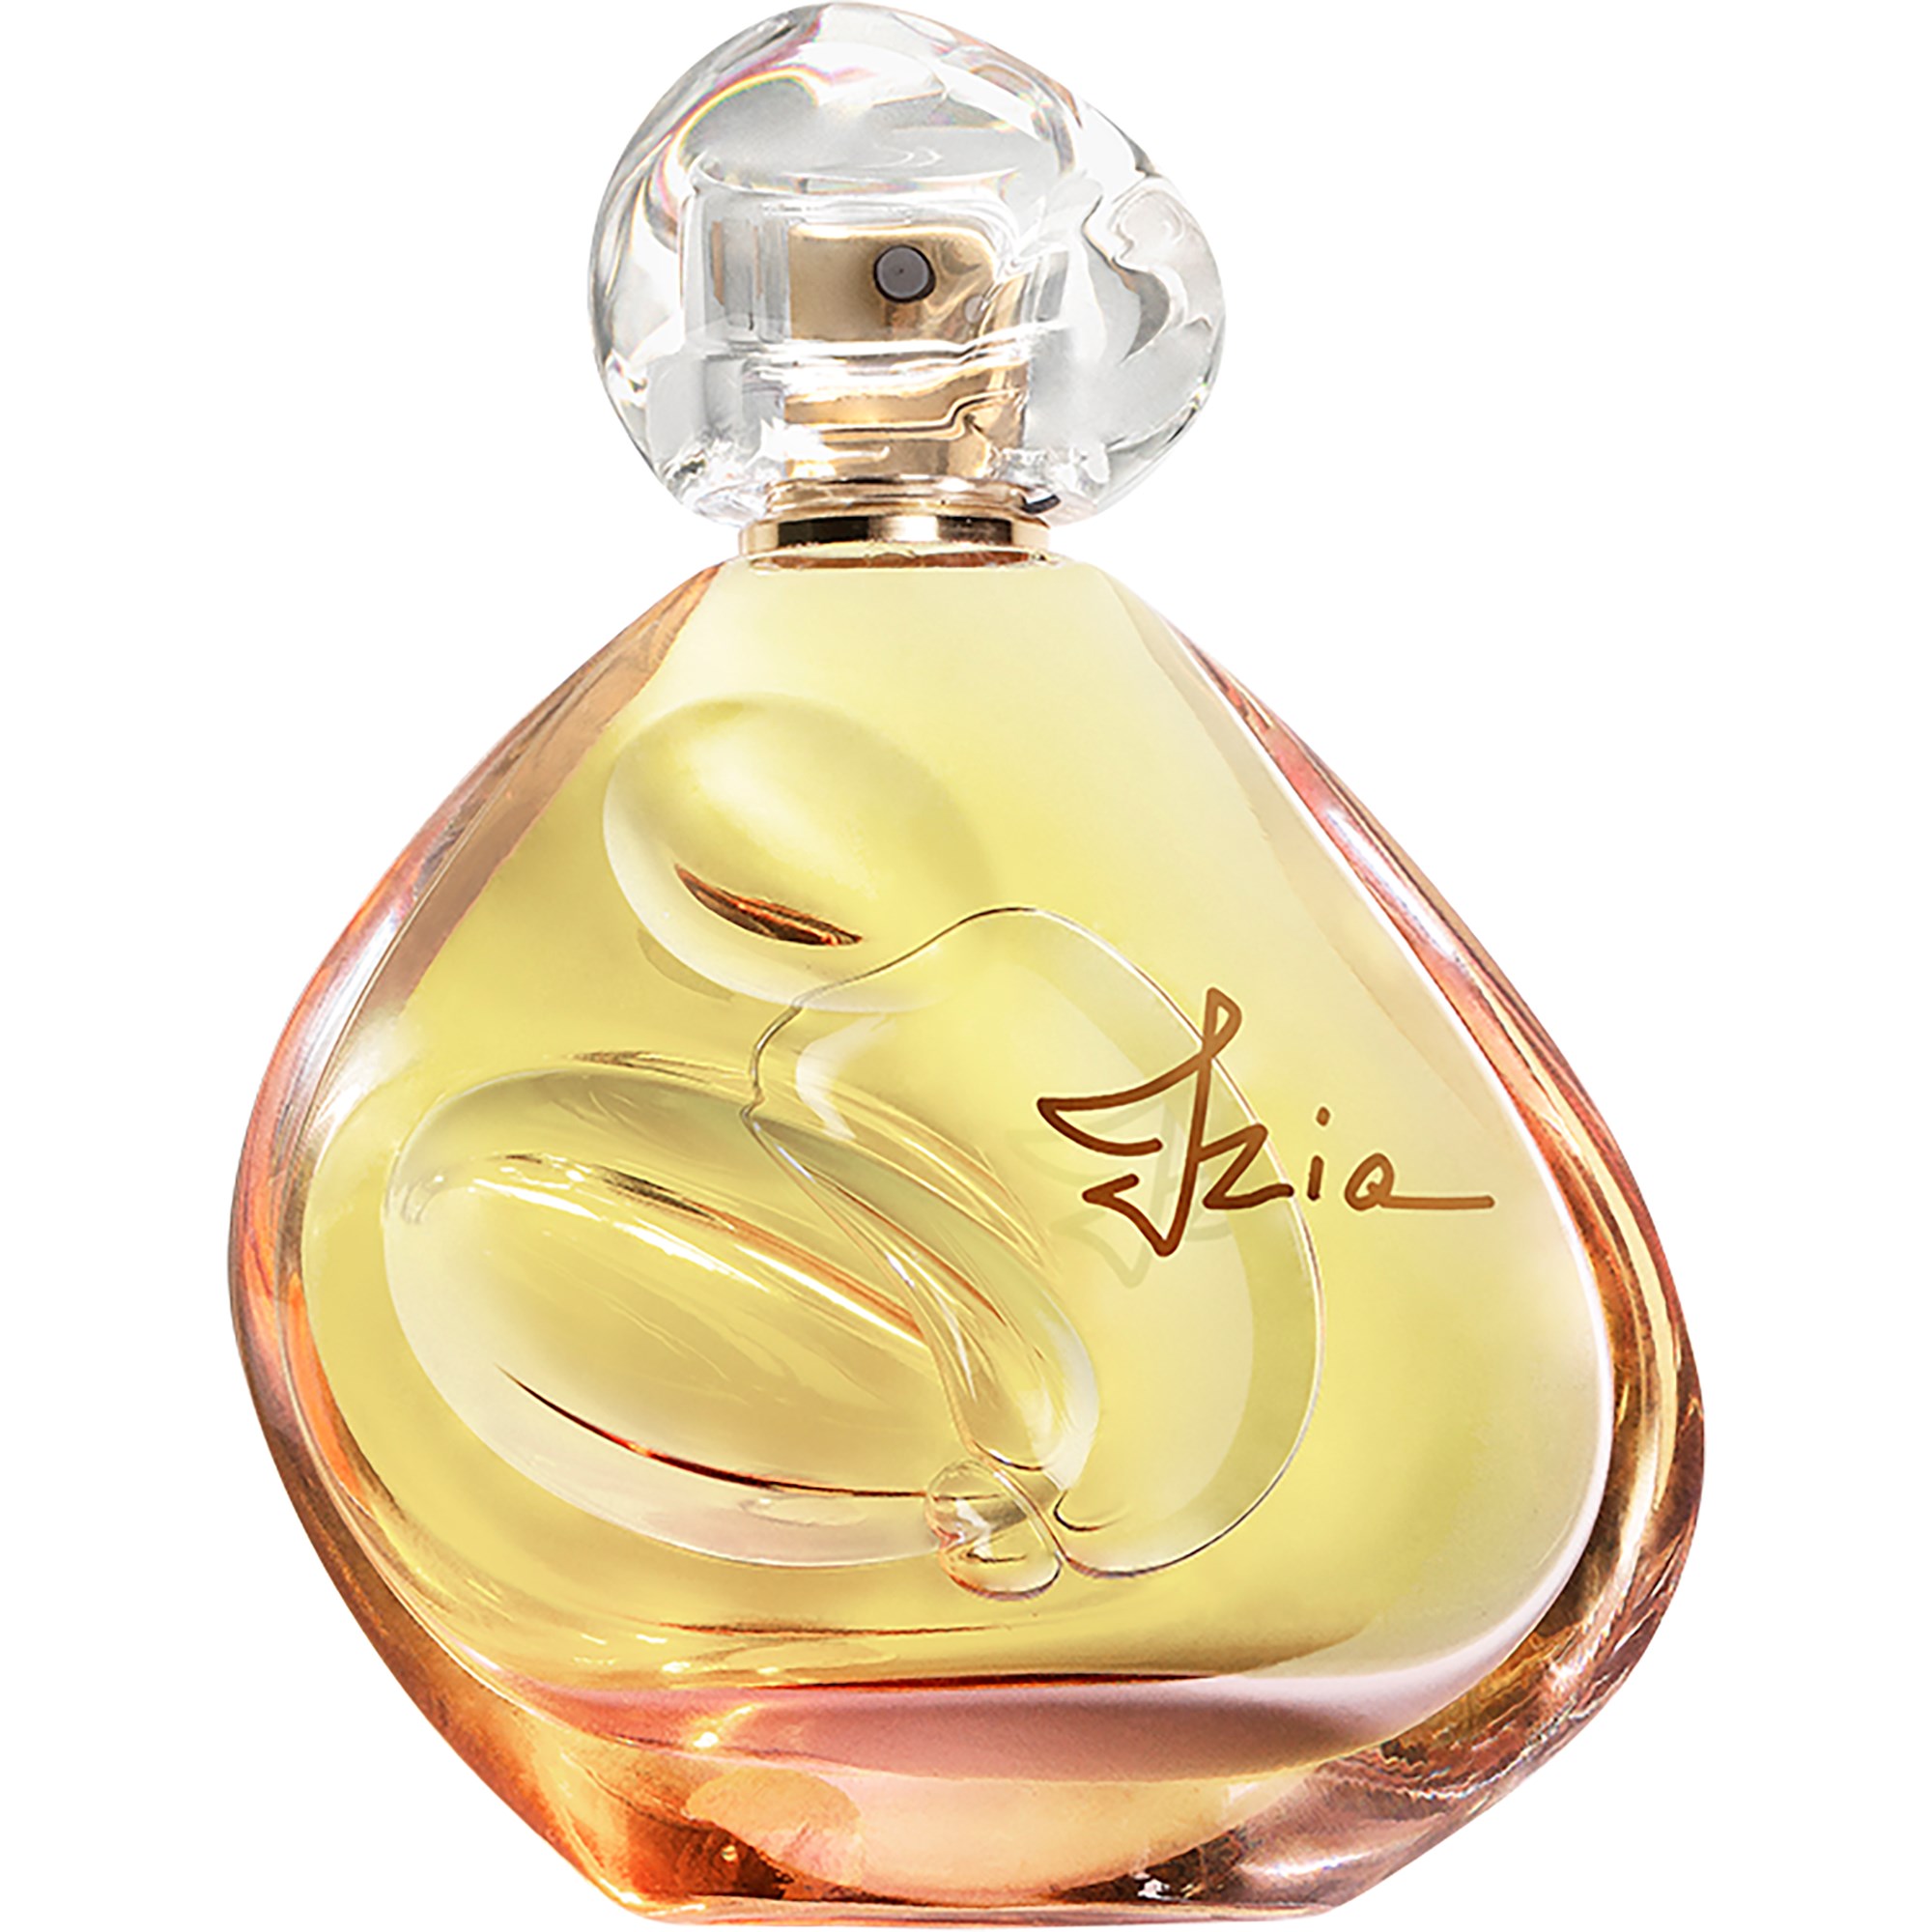 Фото - Жіночі парфуми Sisley Izia Eau de Parfum 100 ml 